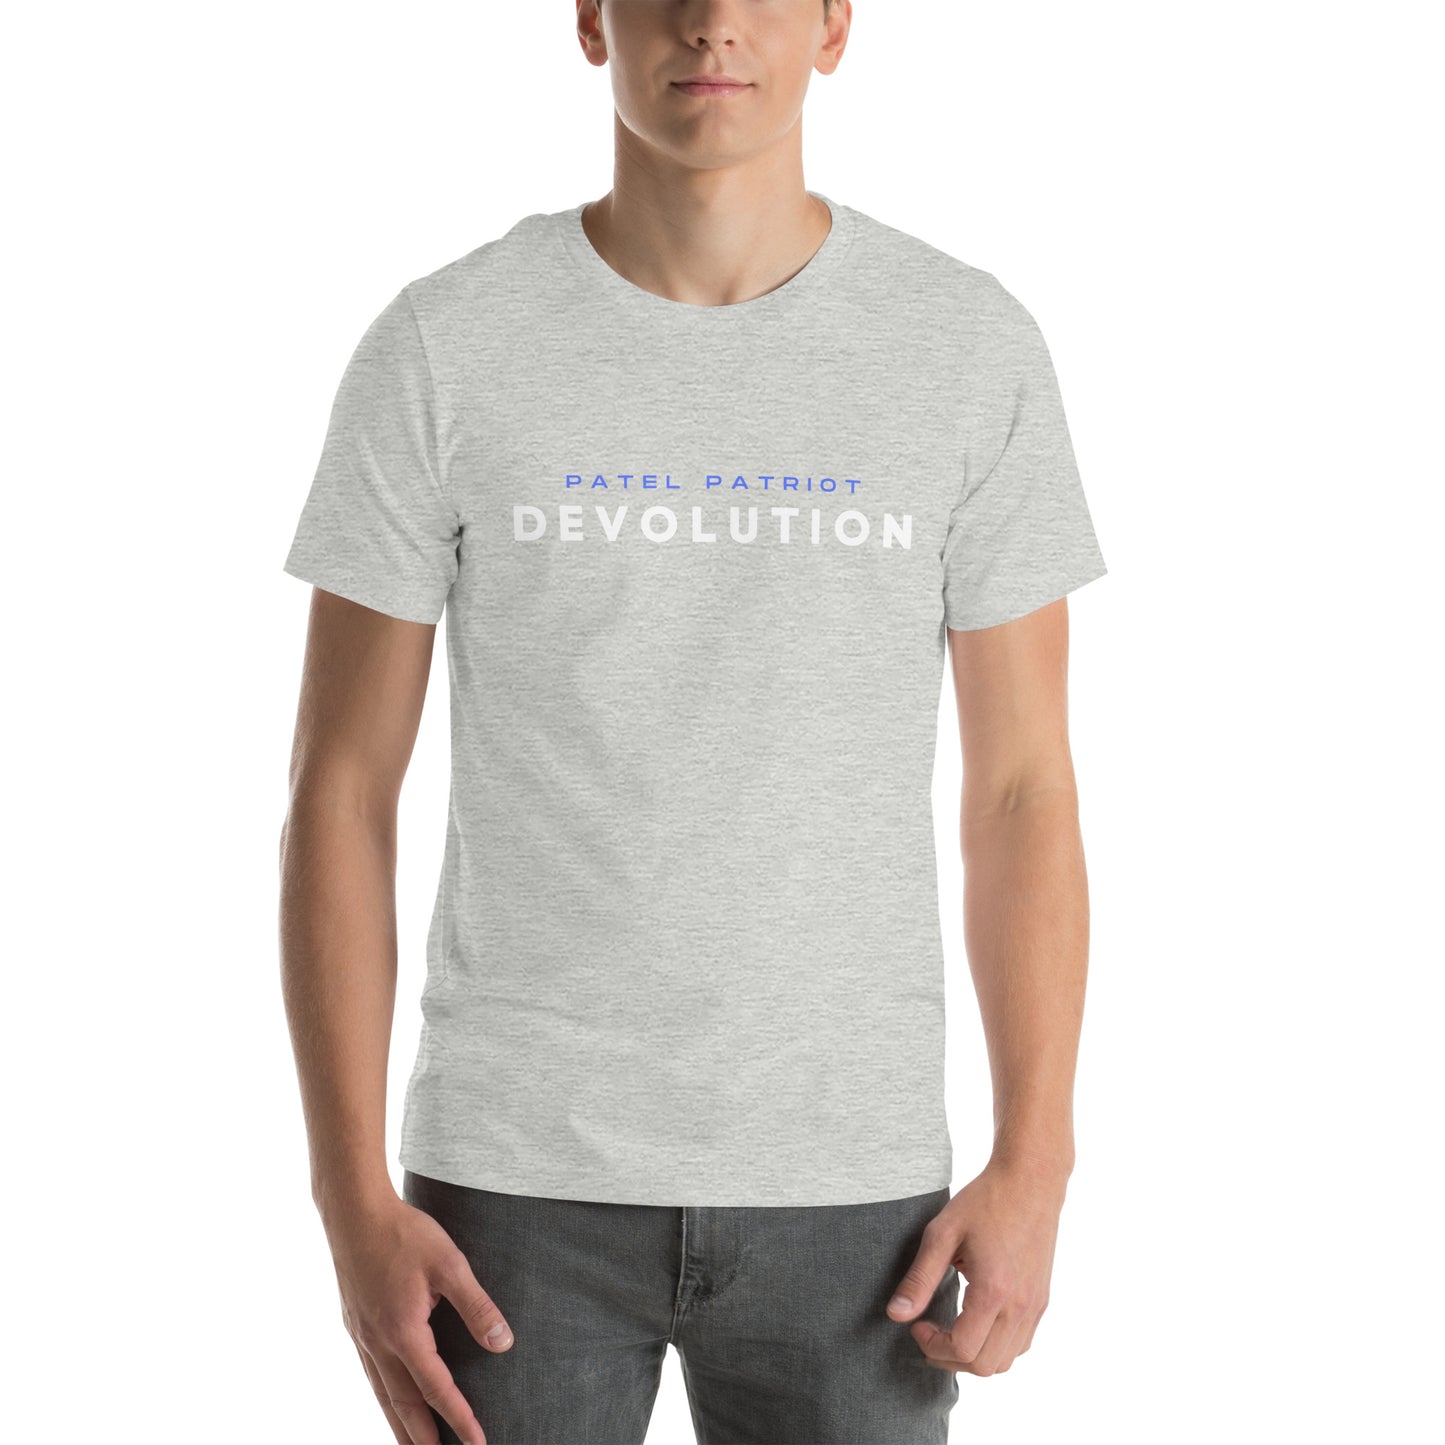 Devolution Unisex t-shirt (white and blue logo)